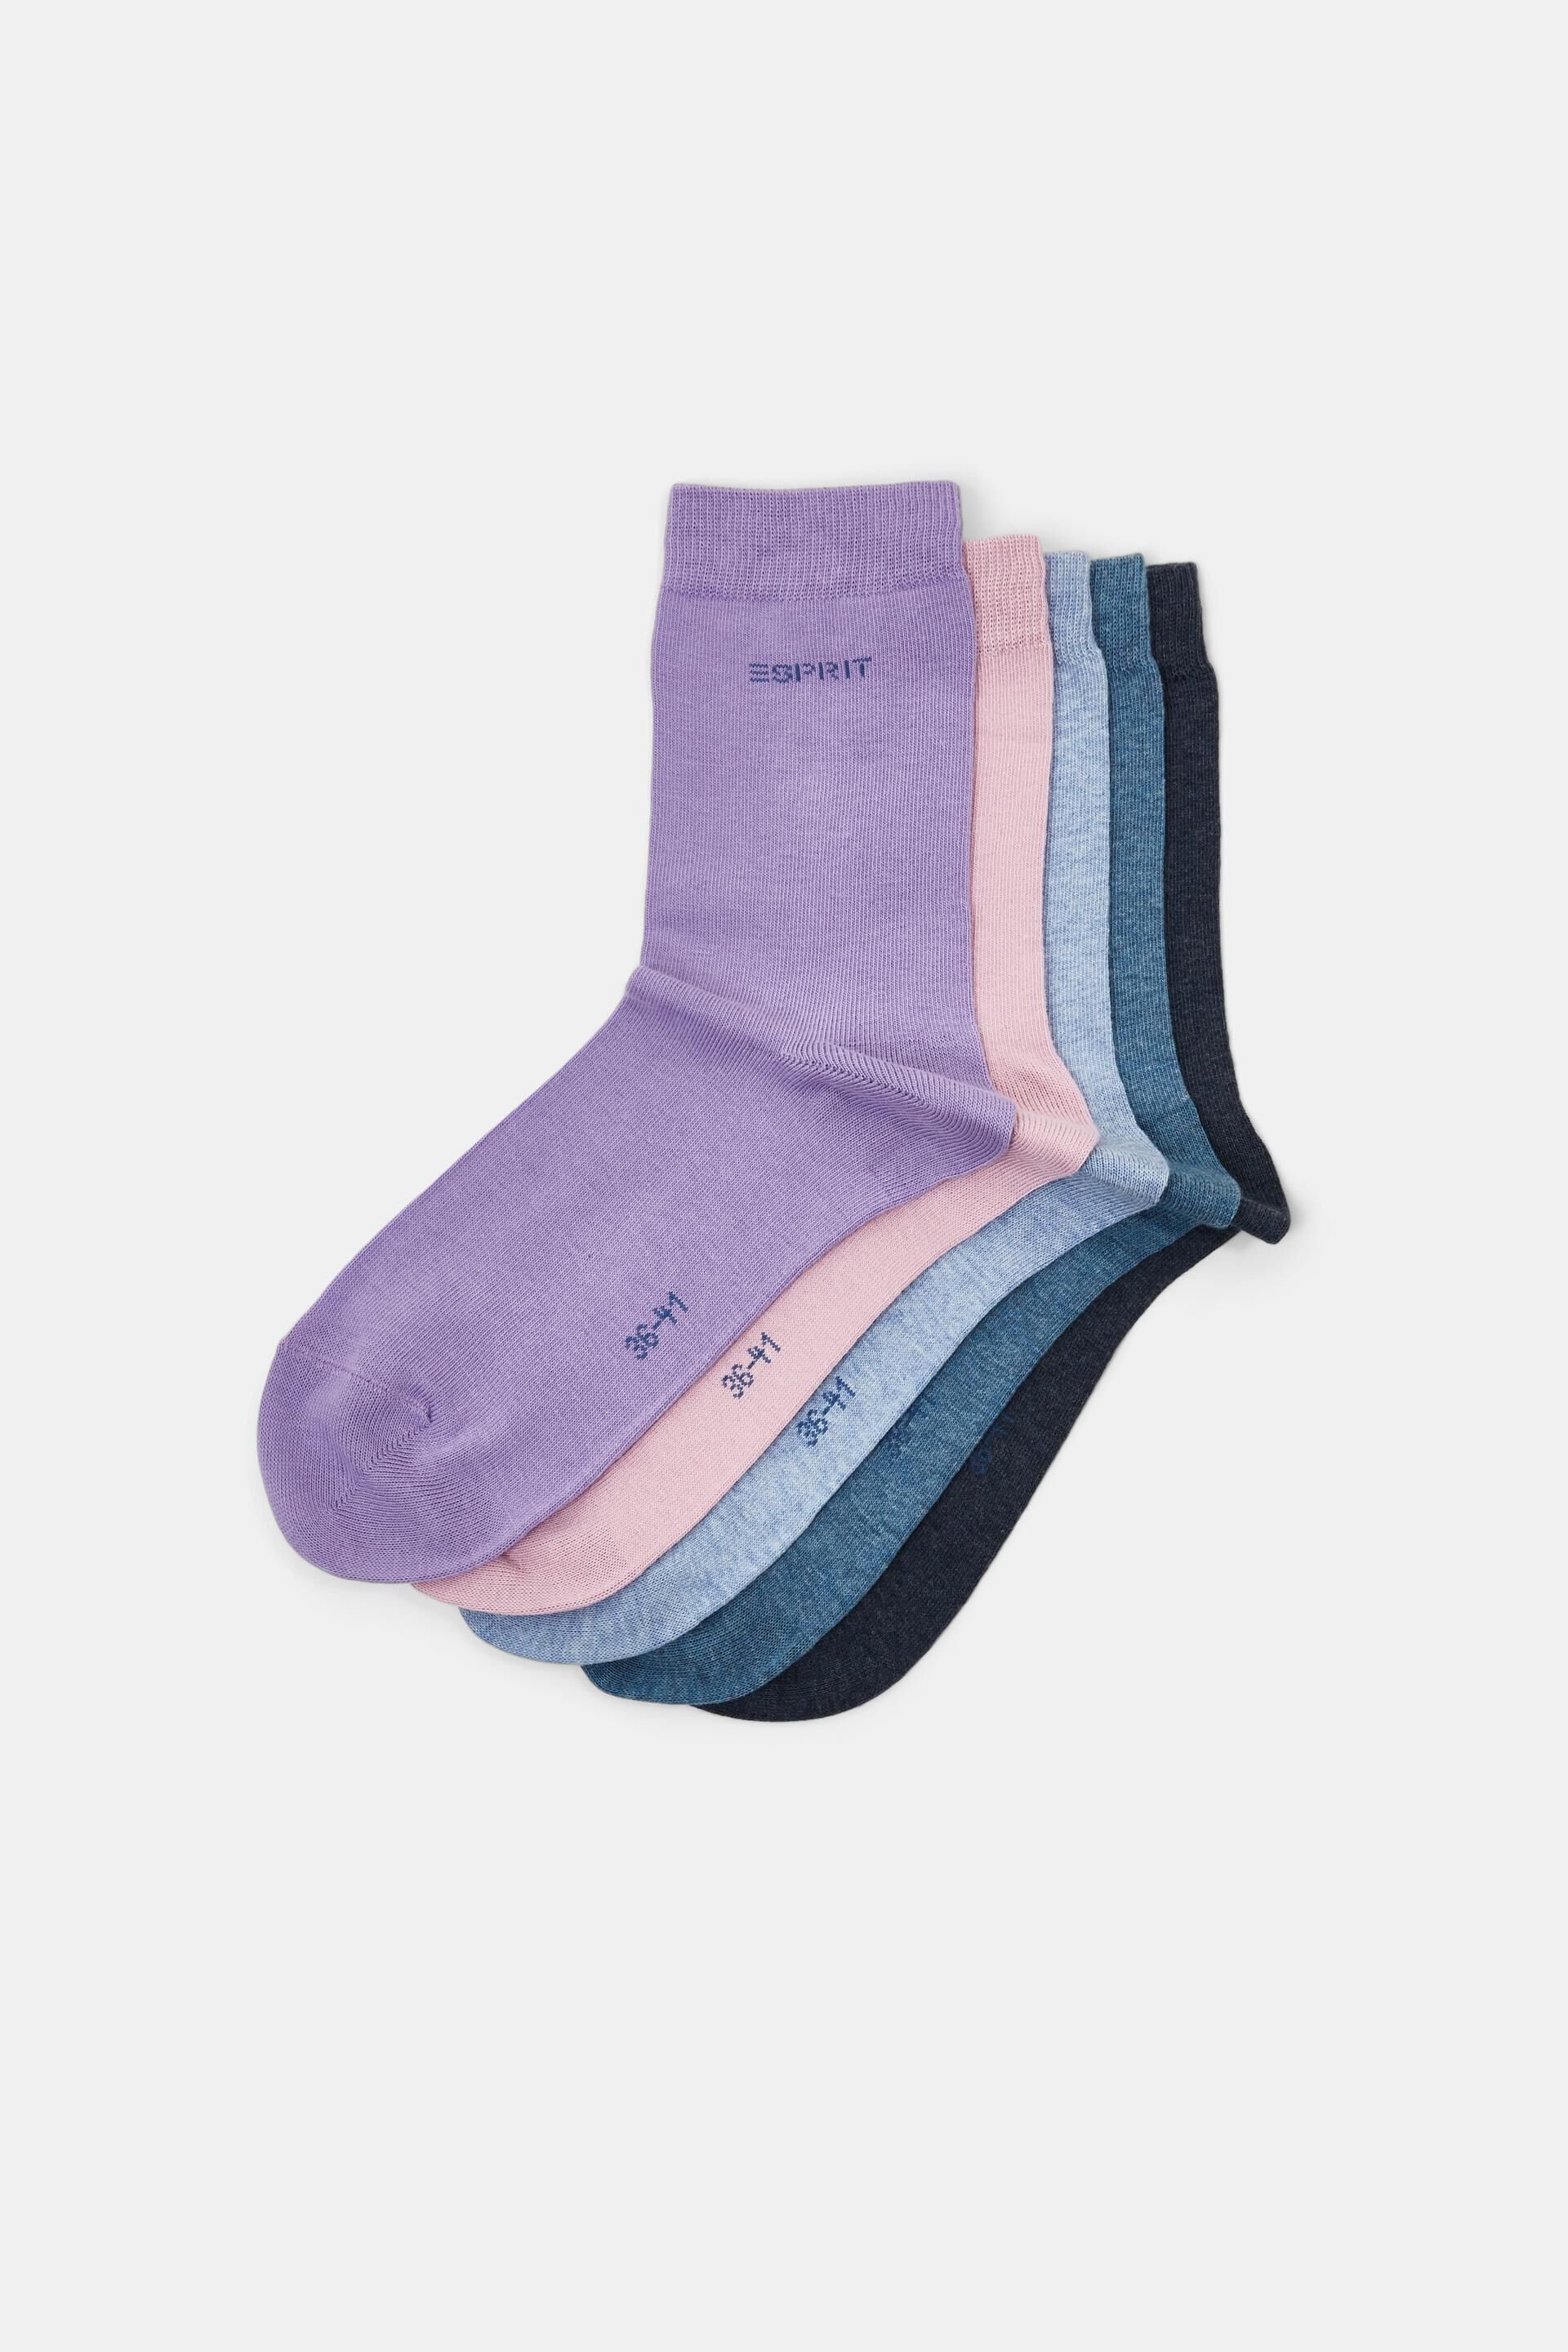 Esprit cotton of organic socks, 5-pack